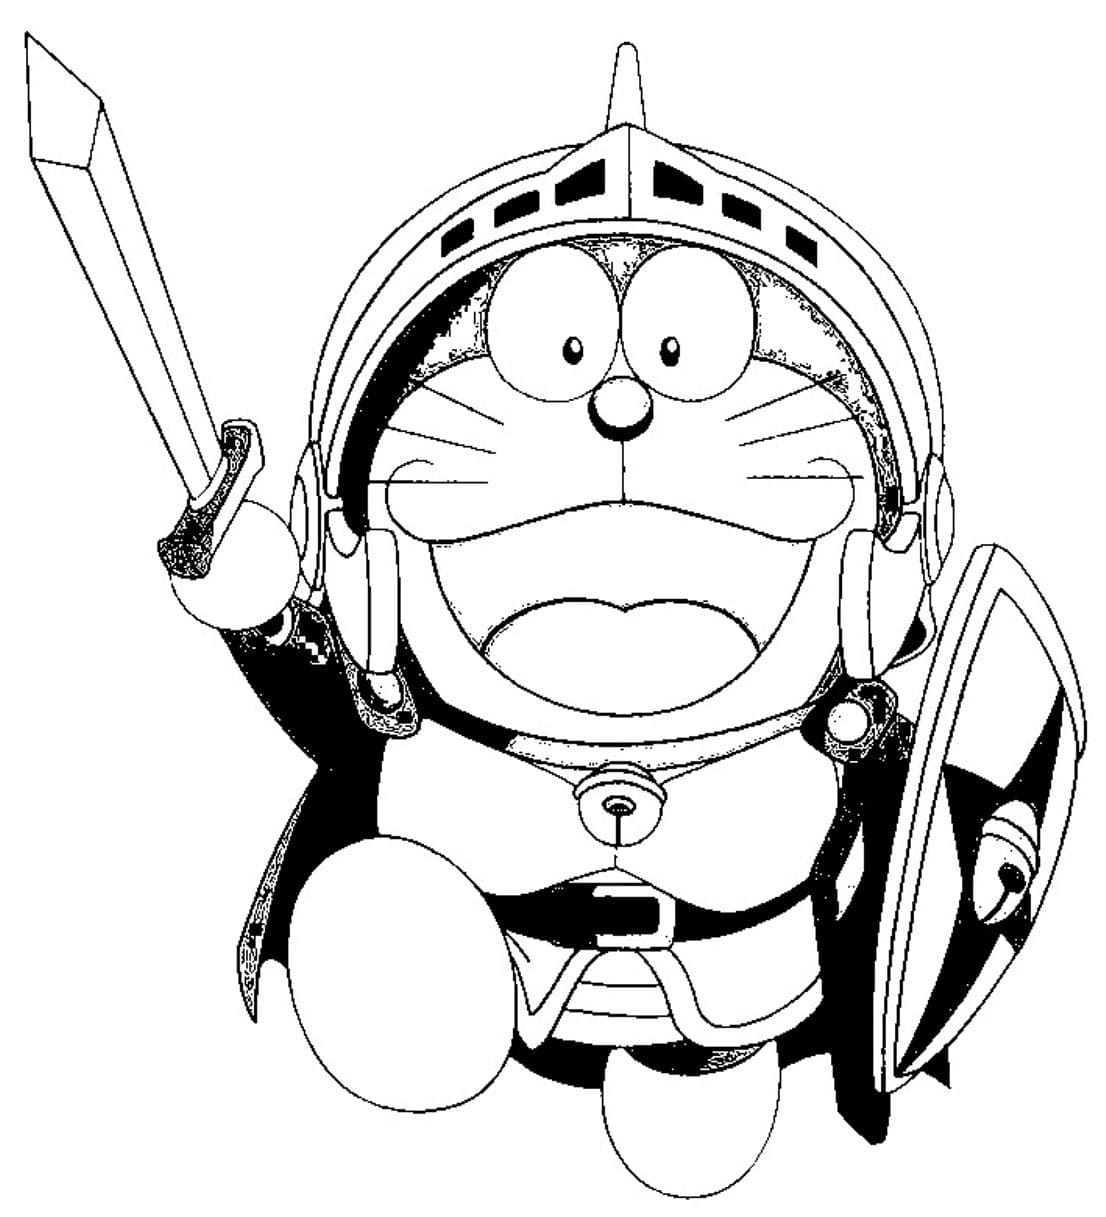 Doraemon-Ausmalbilder-ausmalbilderkinder.de-31